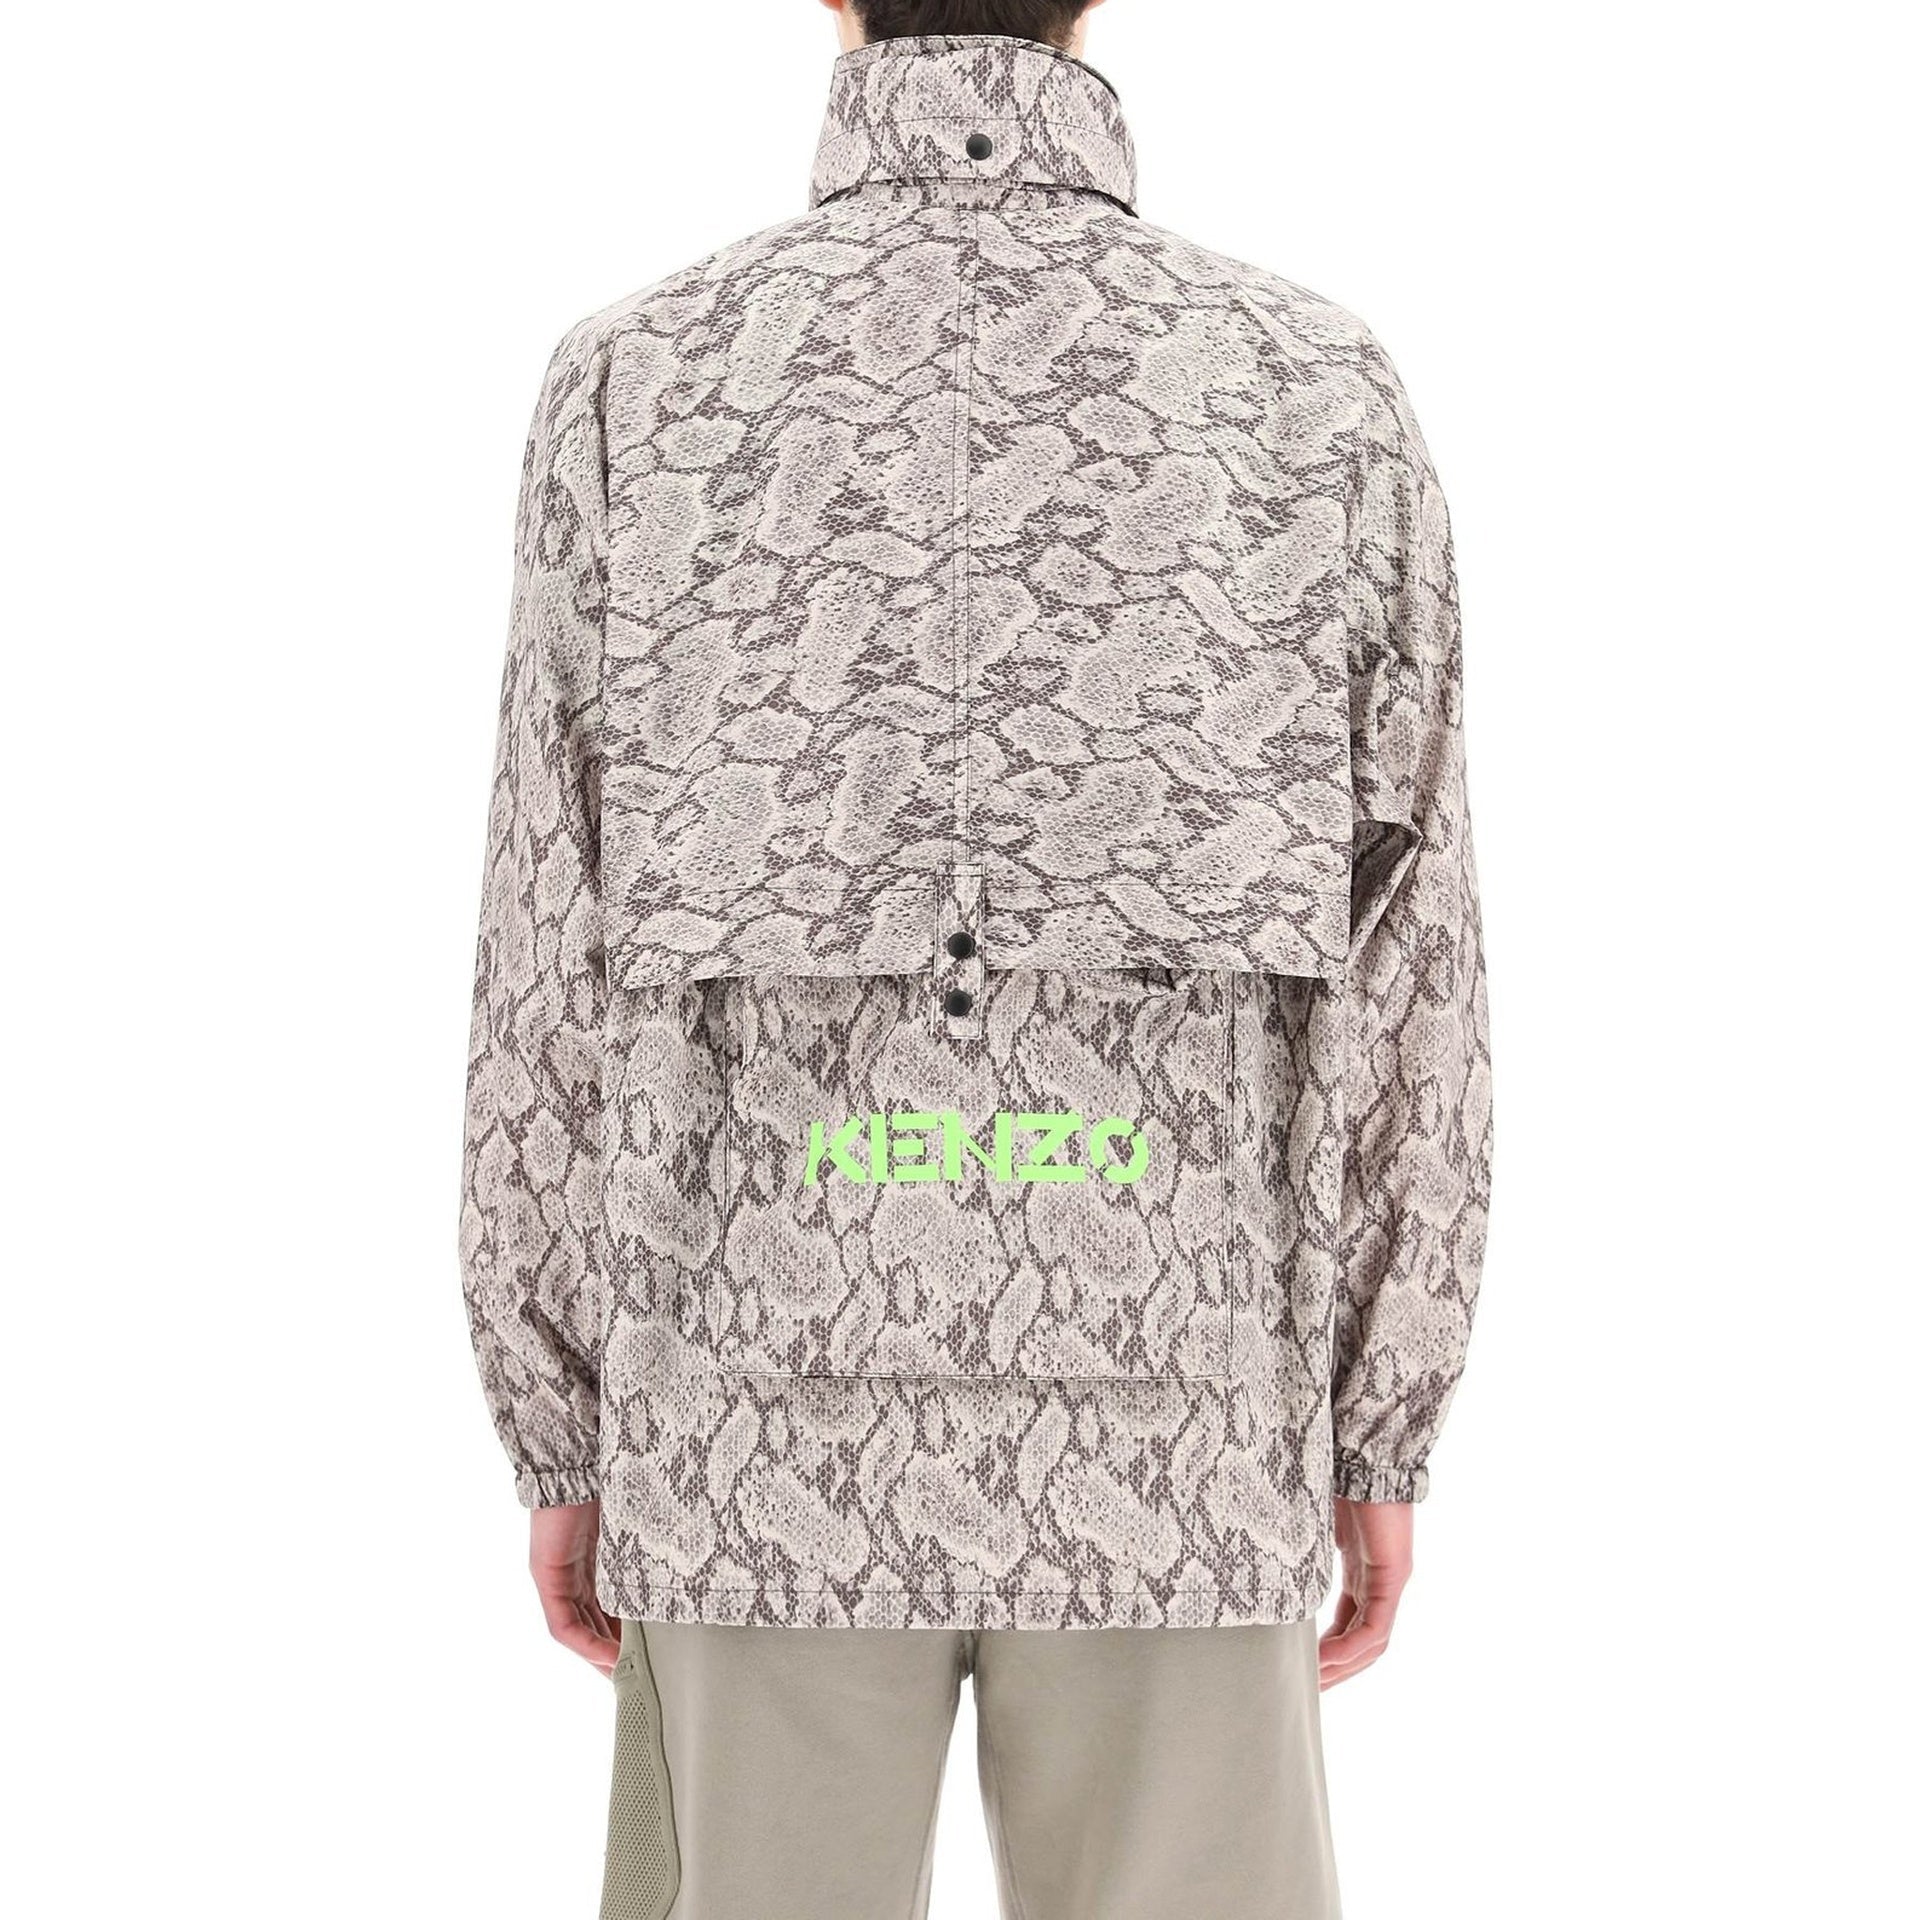 KENZO-OUTLET-SALE-Kenzo-Snakeskin-Printed-Jacket-Jacken-Mantel-ARCHIVE-COLLECTION-3.jpg